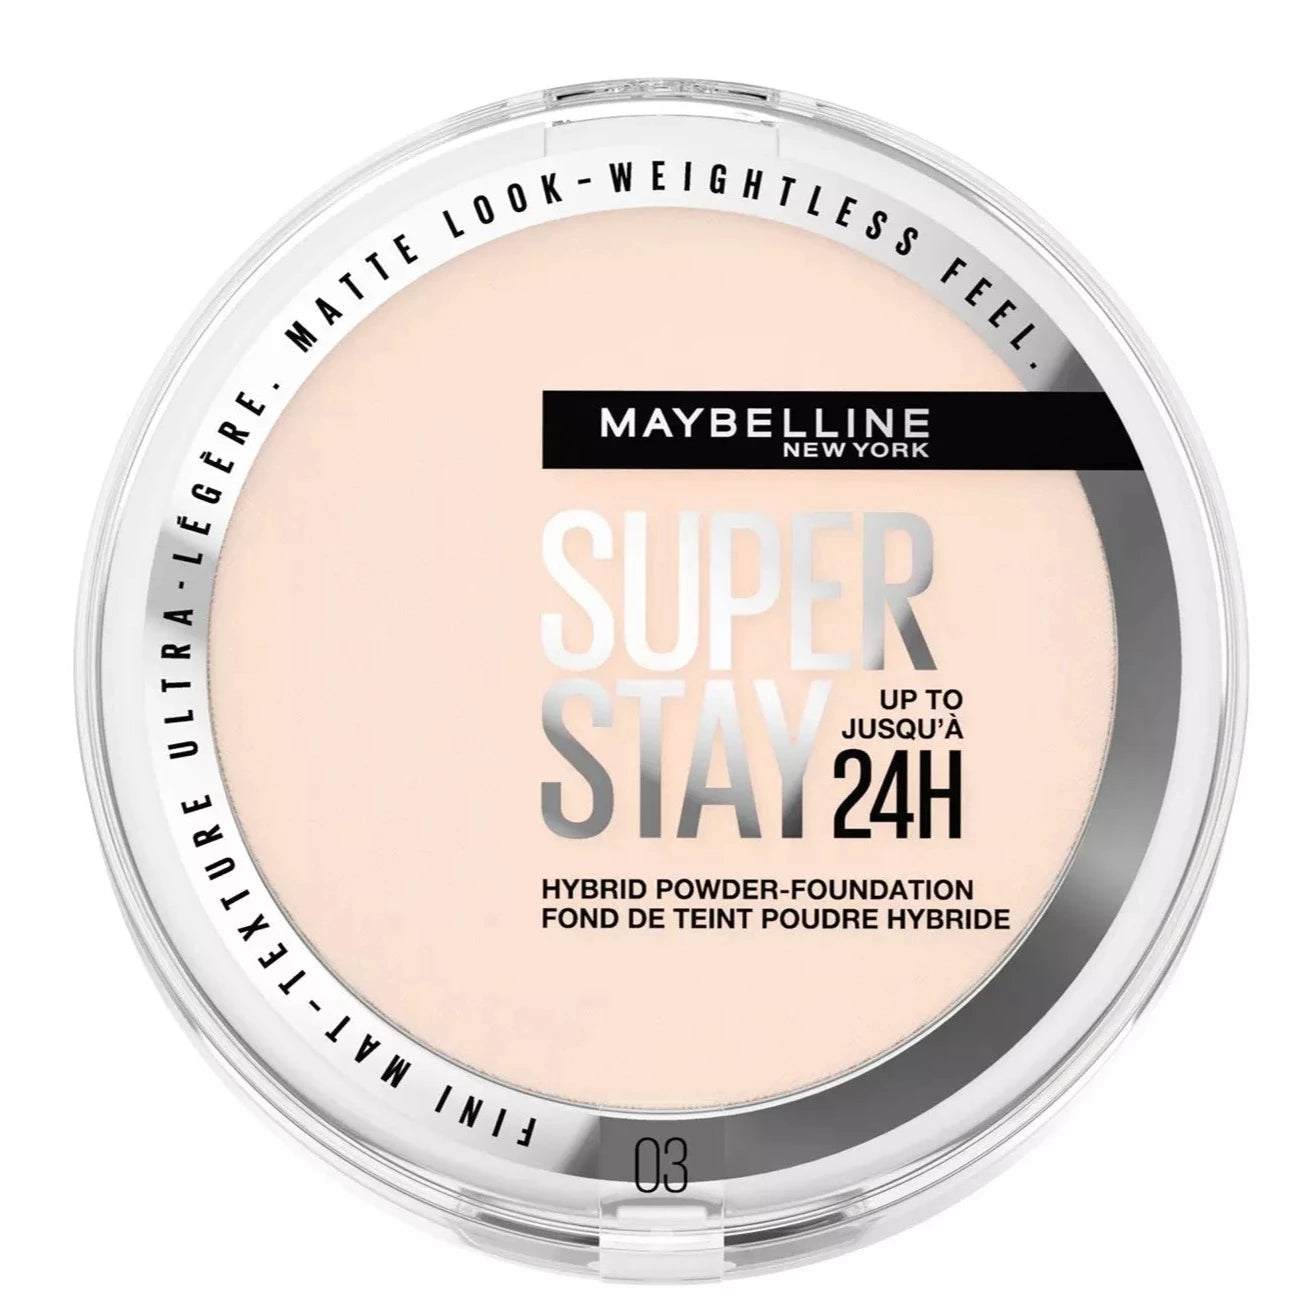 Maybelline Super Stay 24 H Hybrid Powder Foundation - 03